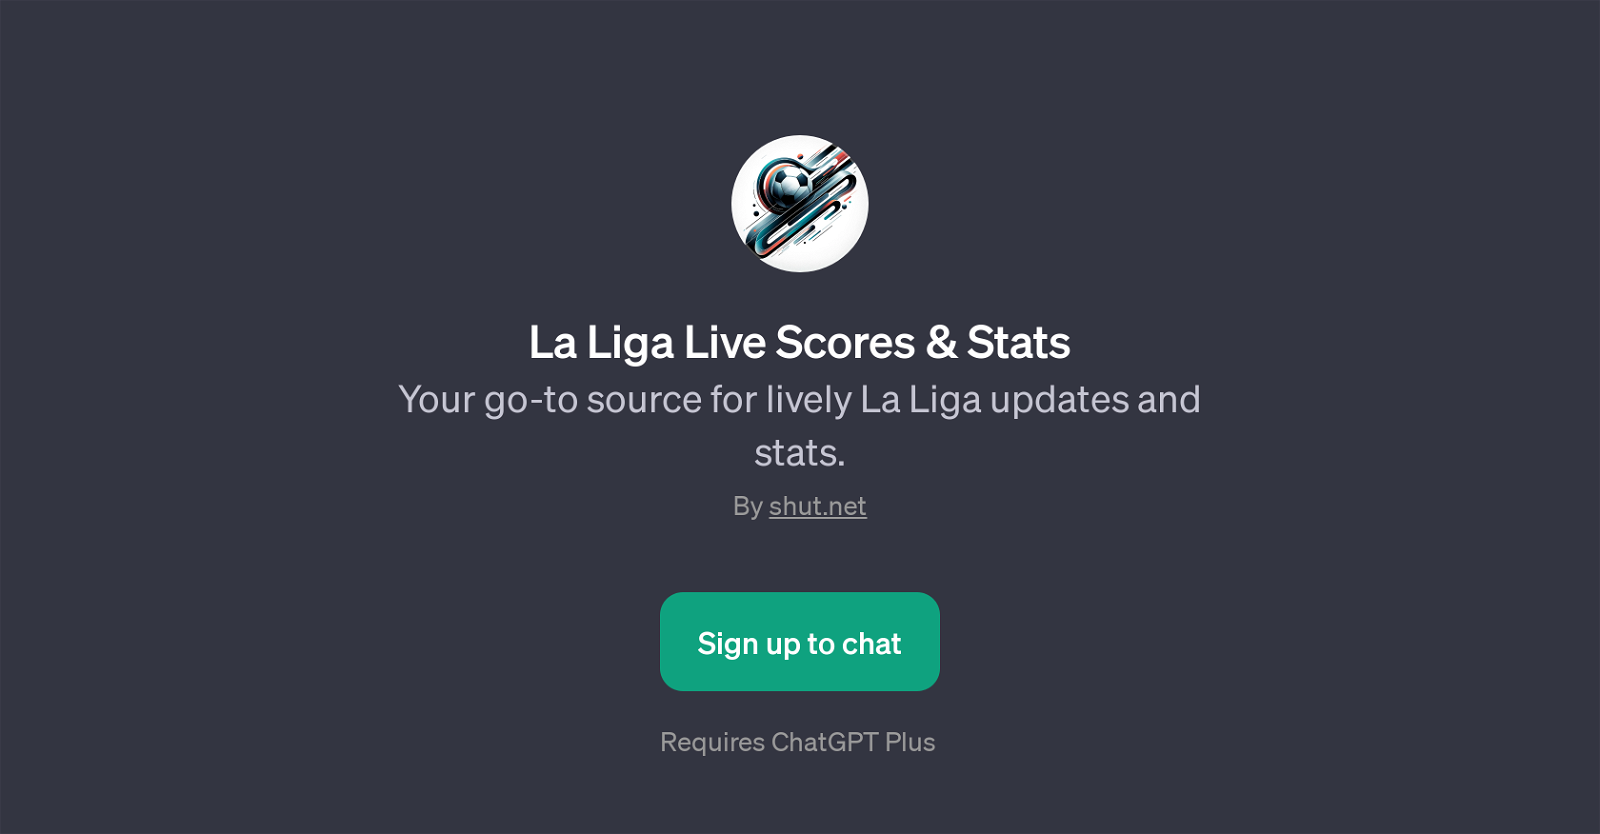 La Liga Live Scores & Stats website